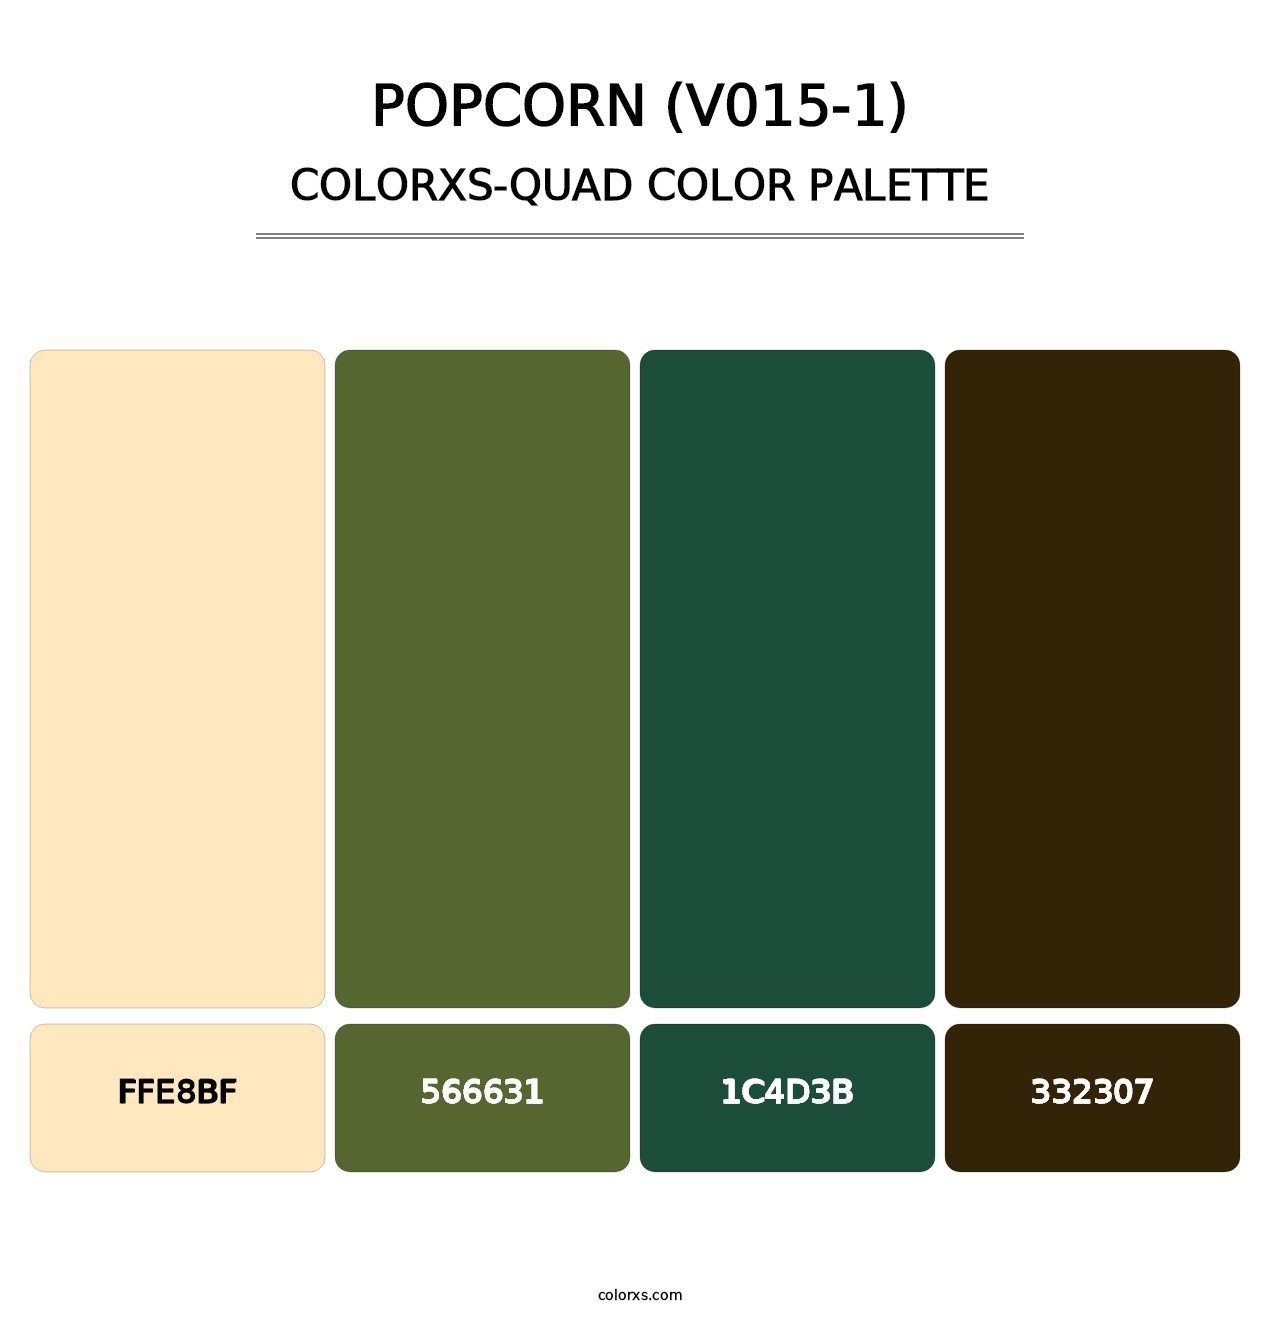 Popcorn (V015-1) - Colorxs Quad Palette